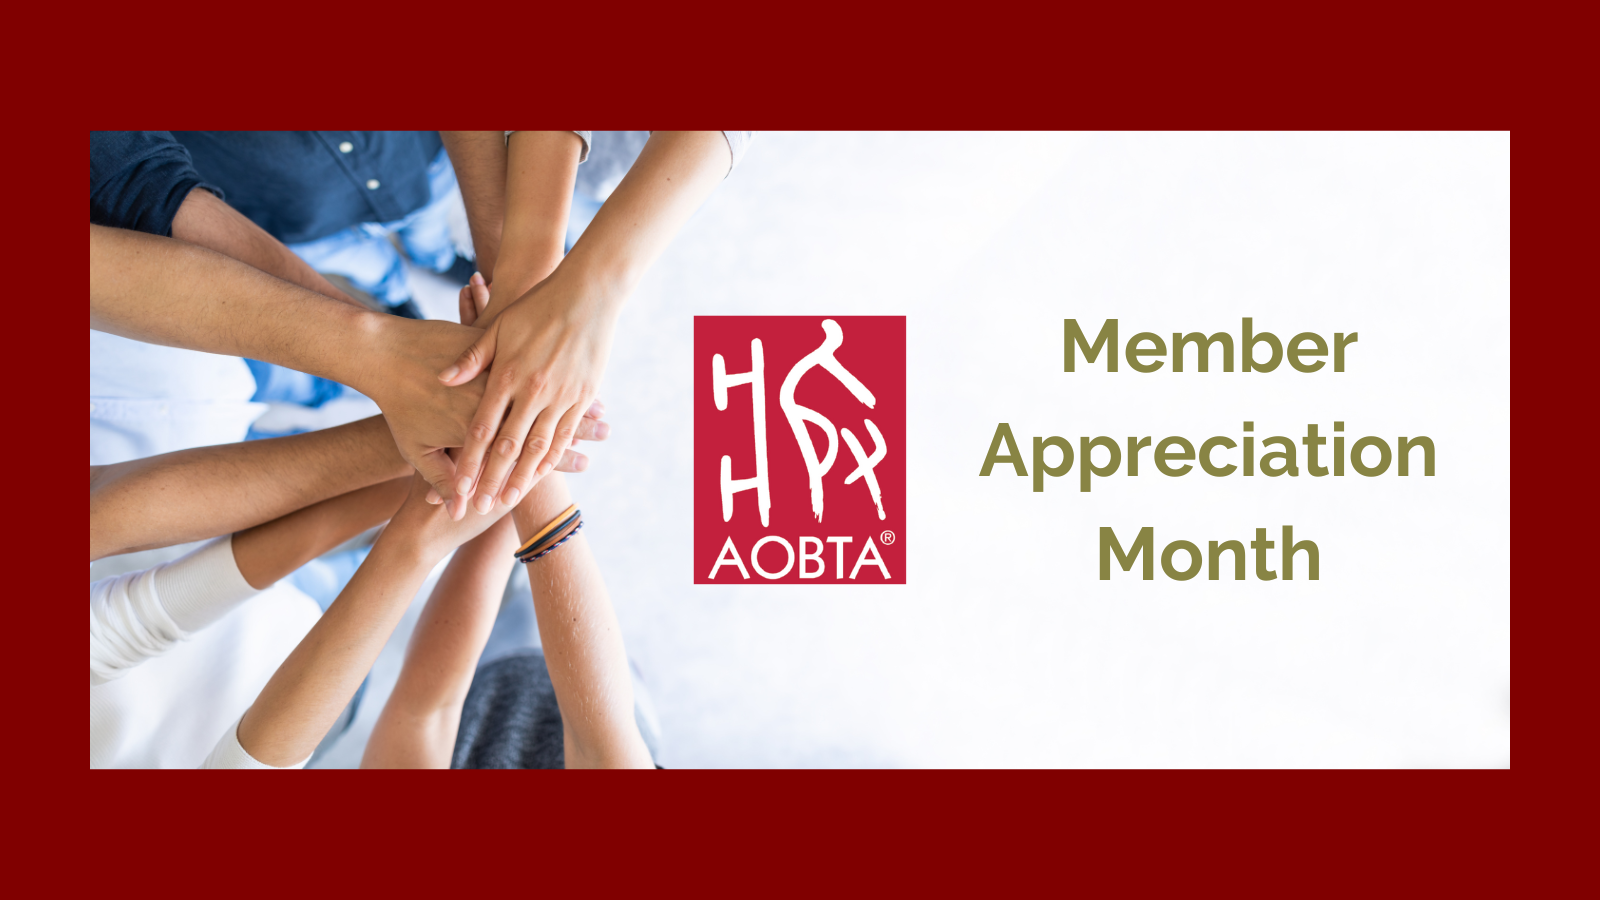 Member Appreciation Month